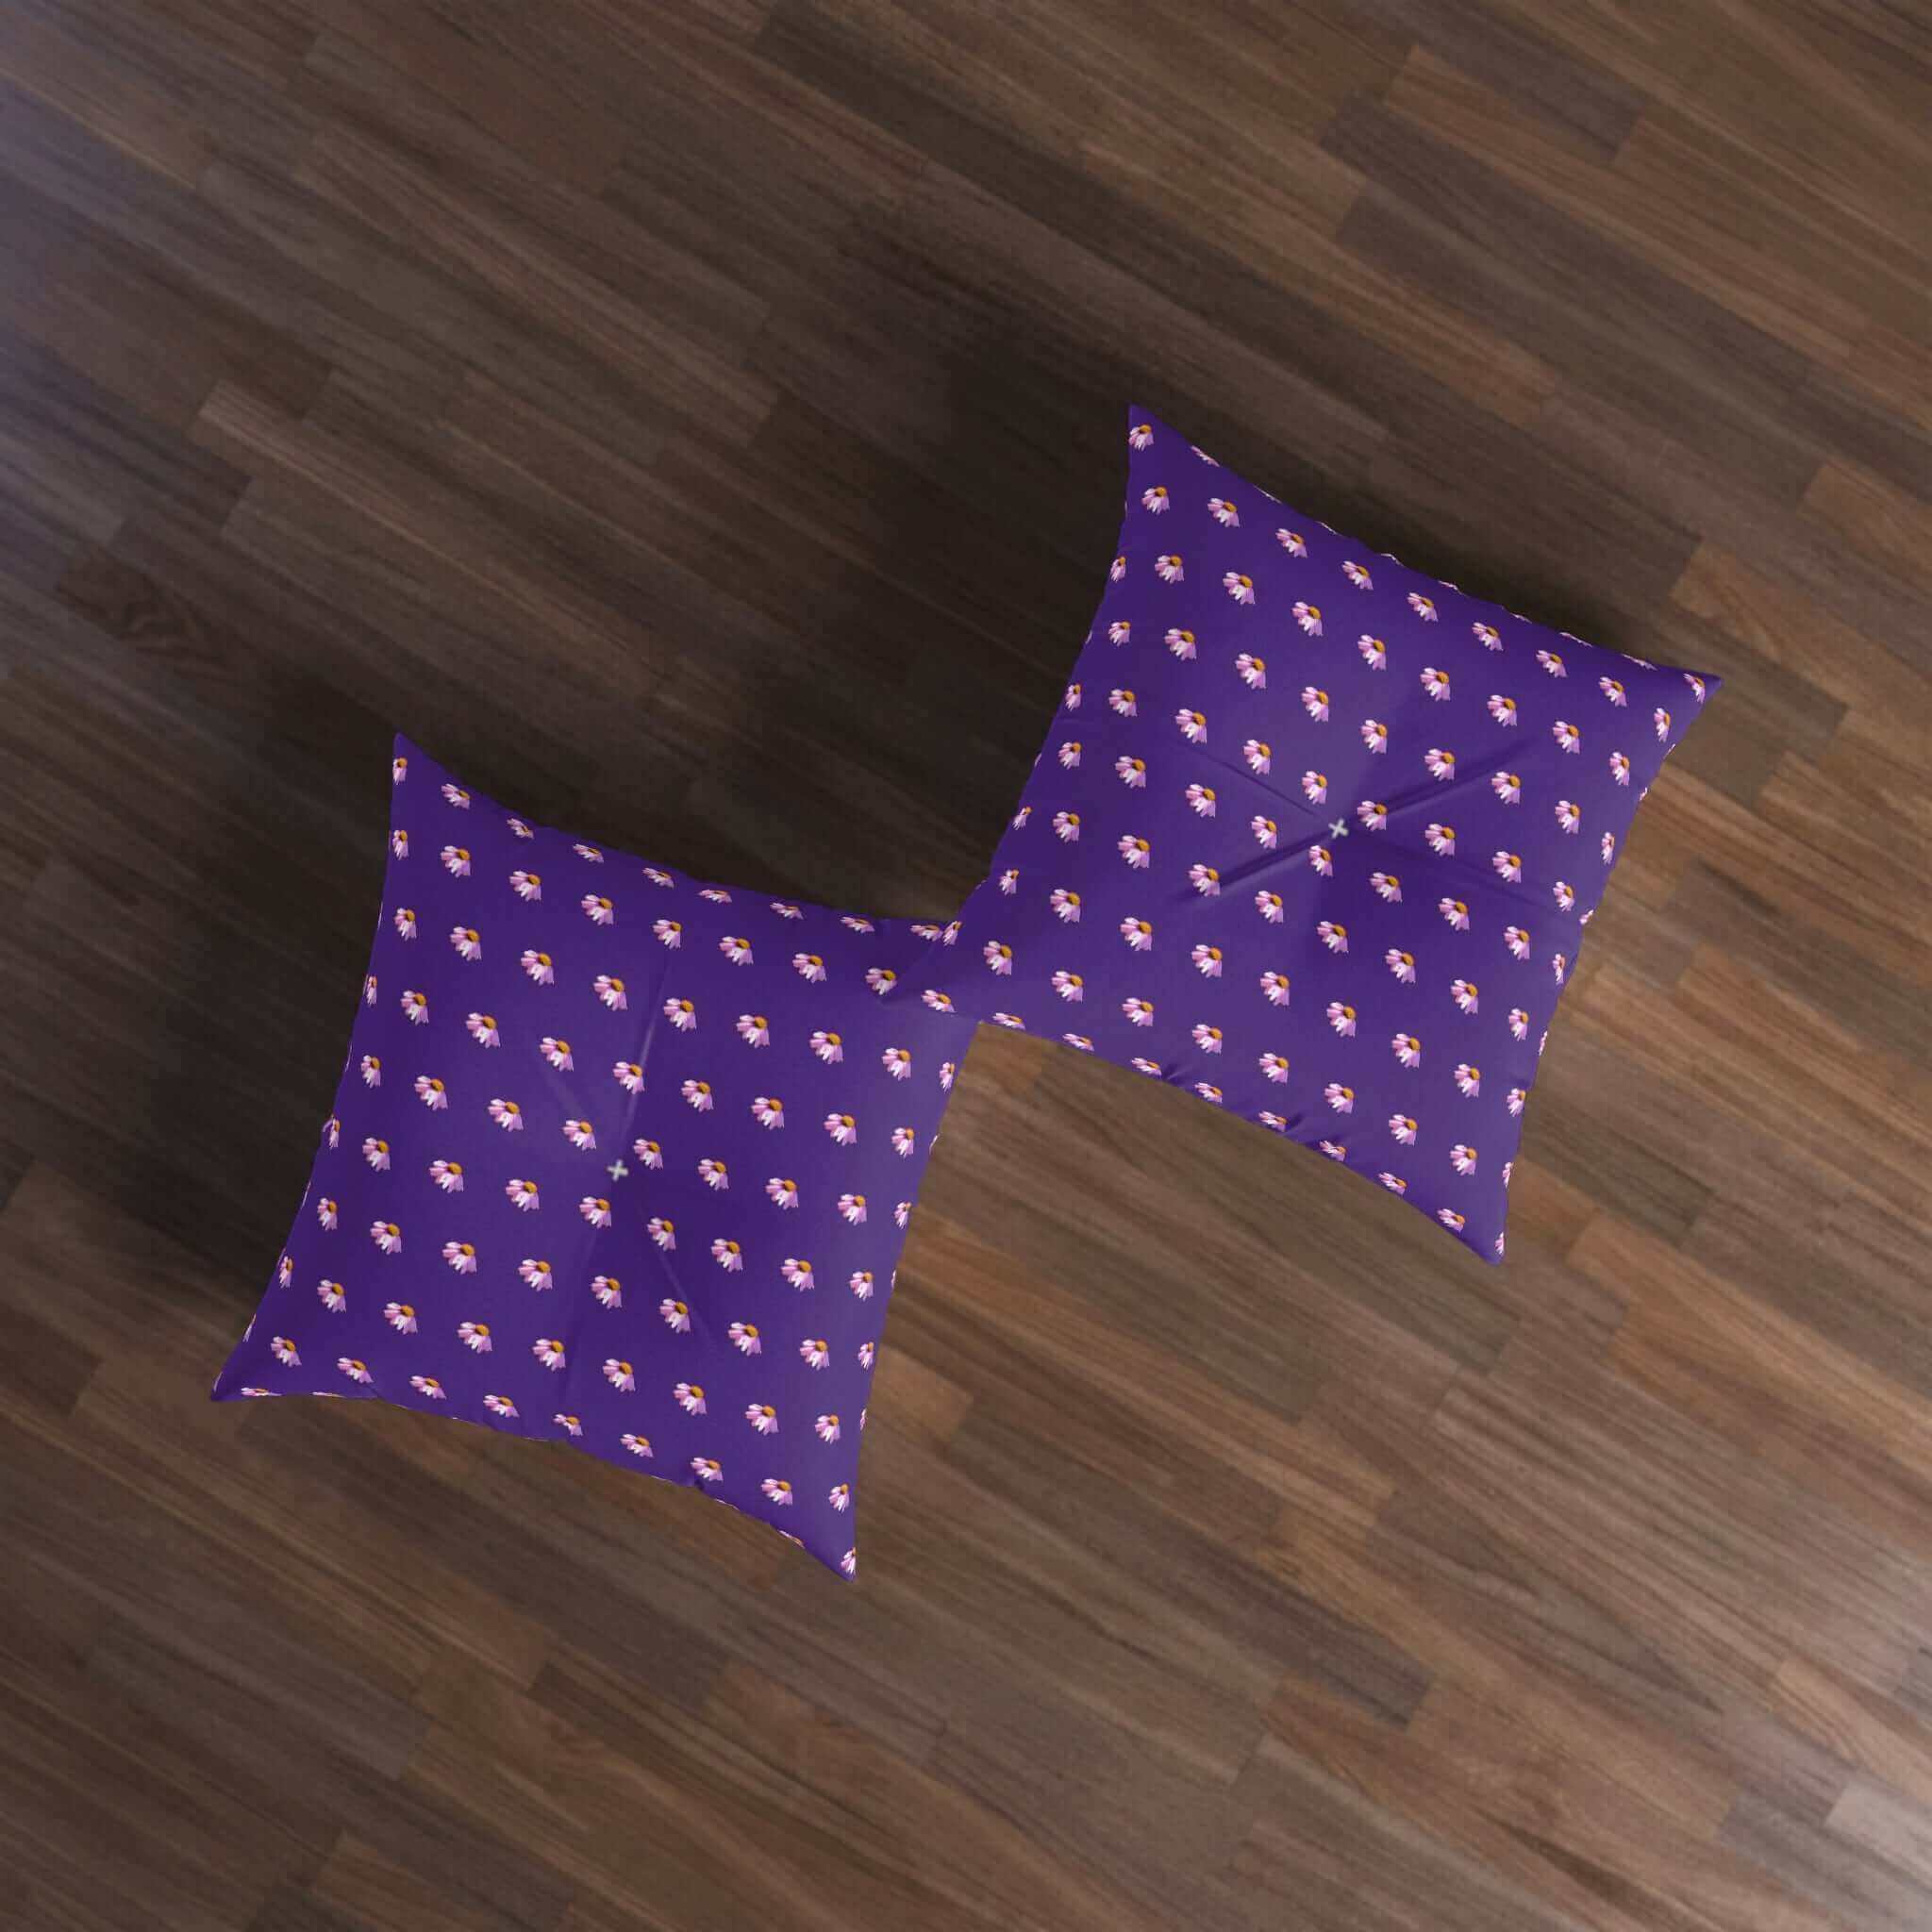 Tufted Coneflower Design Floor Pillow - Hearth Home & Living